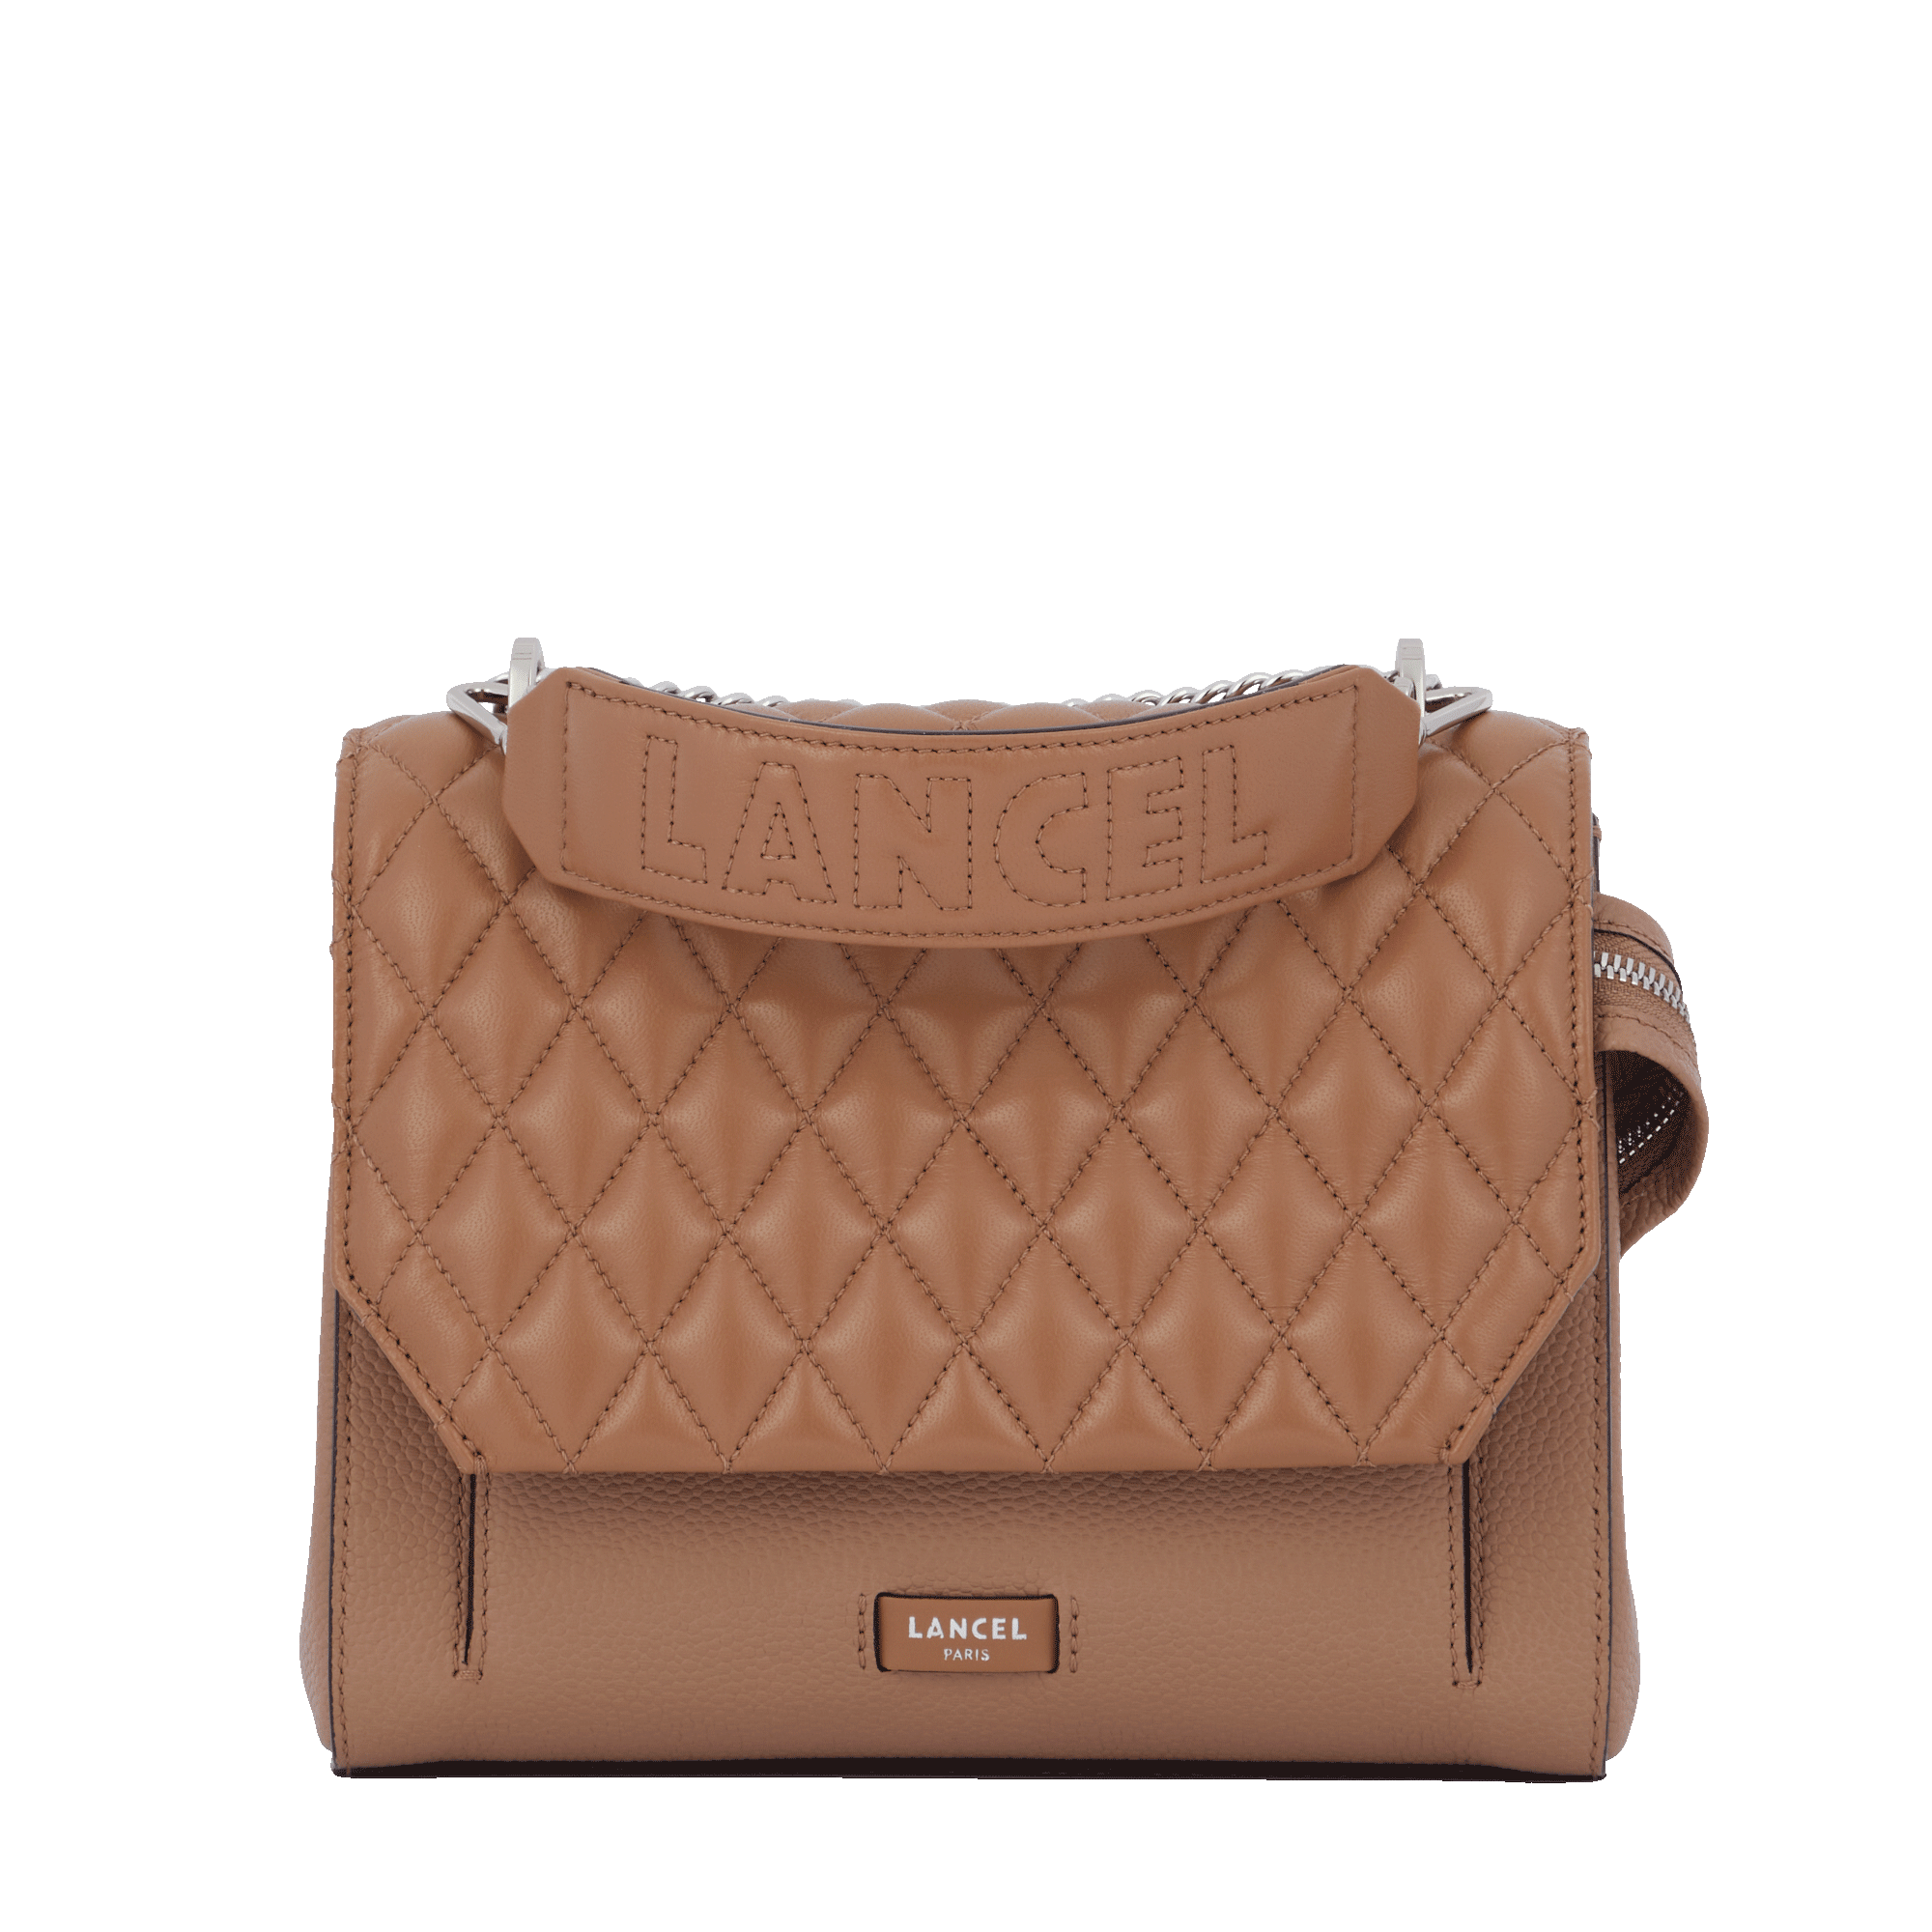 Flap bag – Lancel